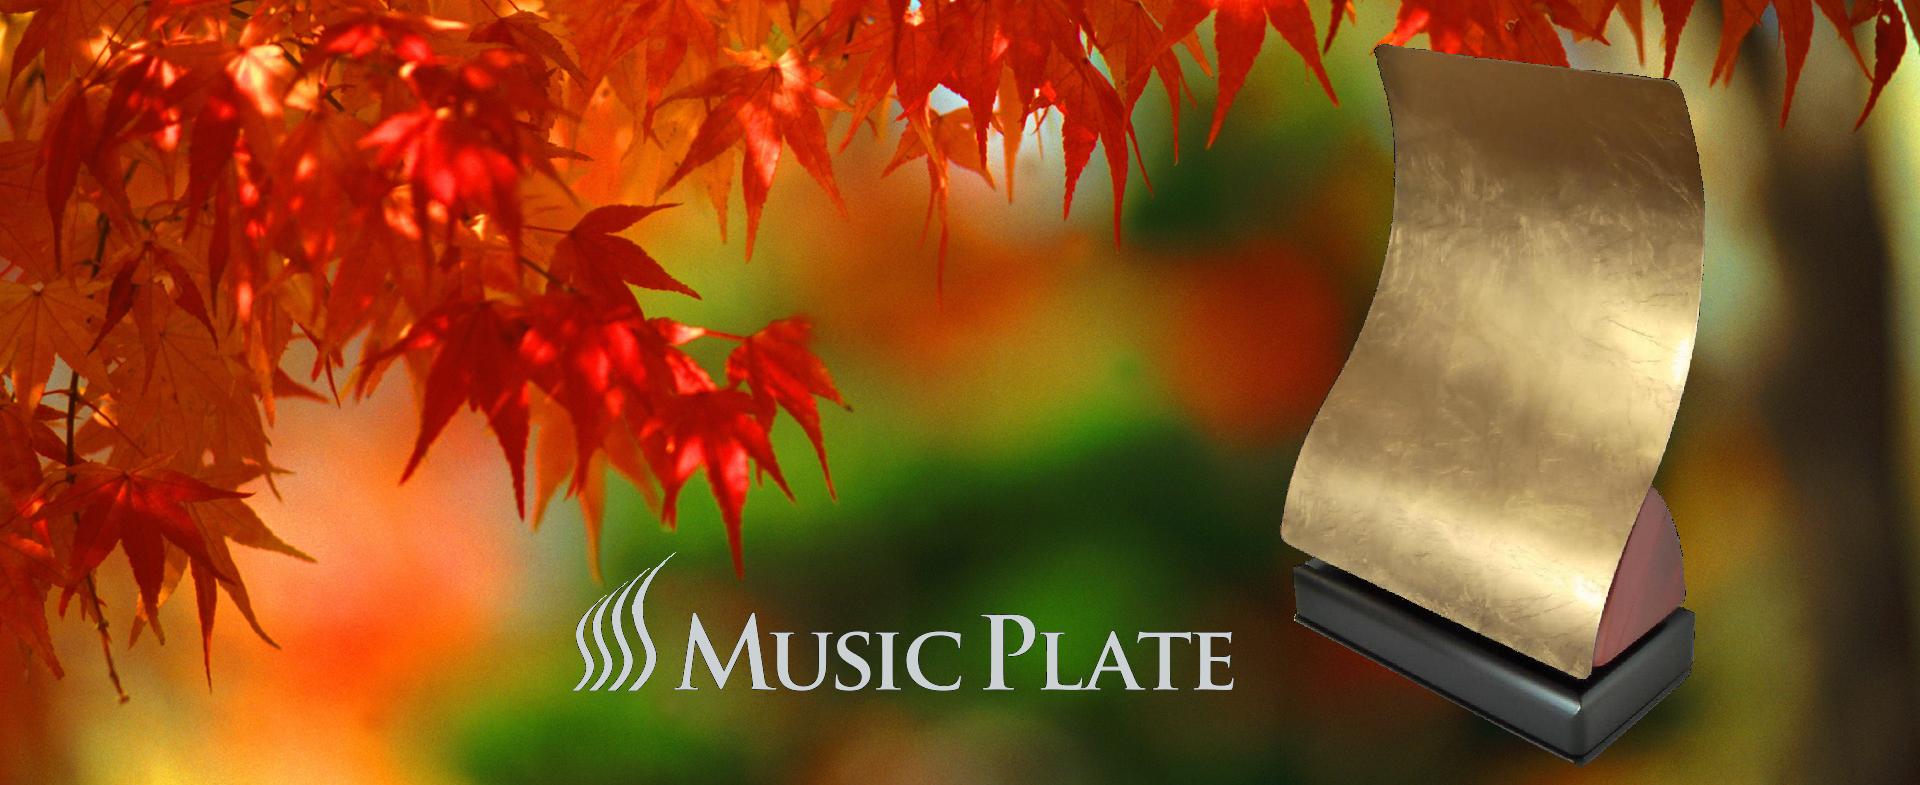 Music Plate TS-1081 gold